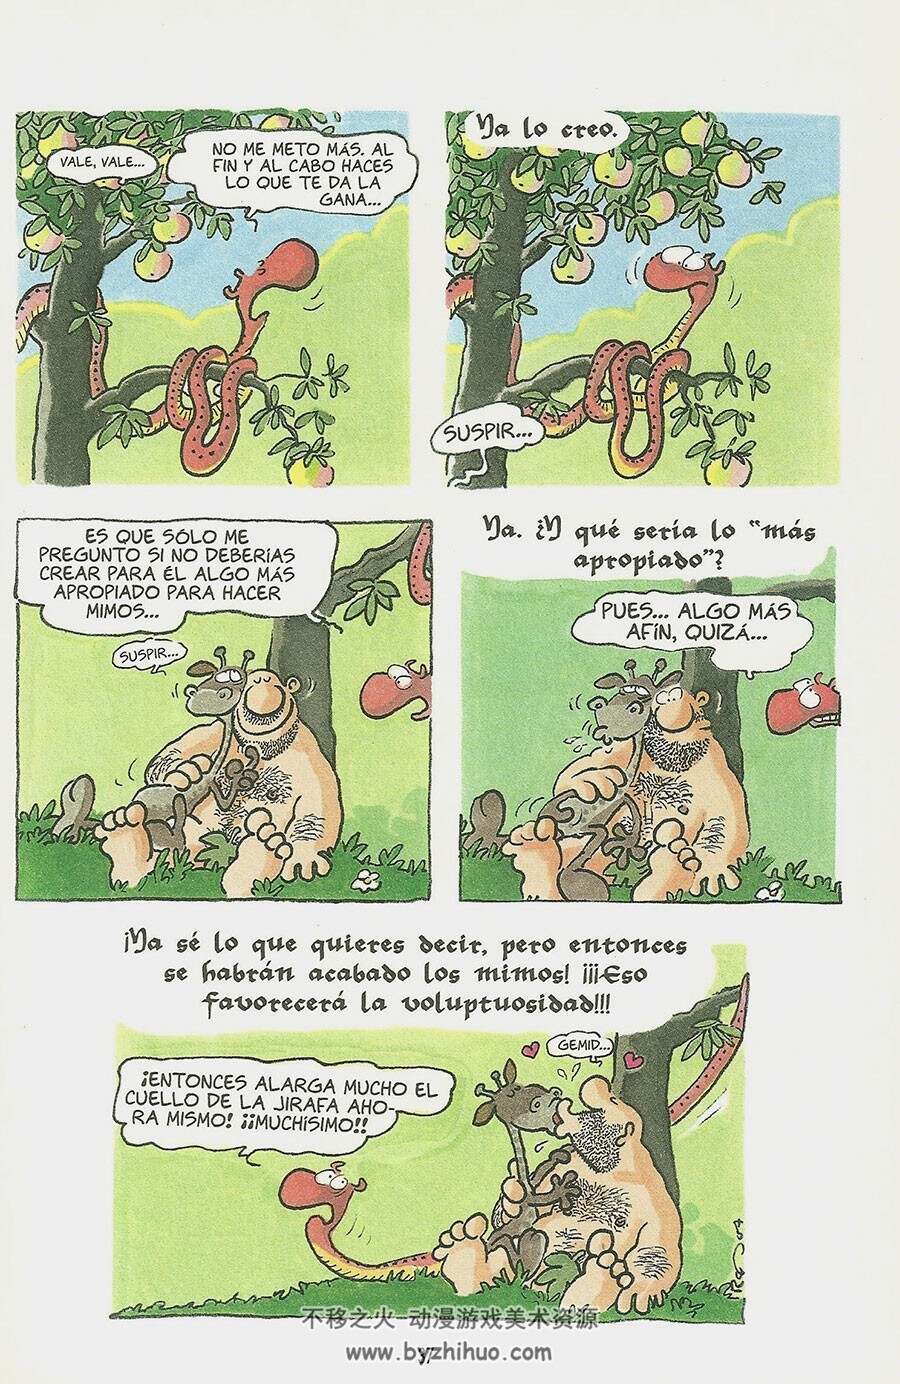 Prototipo 全一册 Ralf König - Wladimir Padrós Casalins  西班牙语卡通搞笑漫画